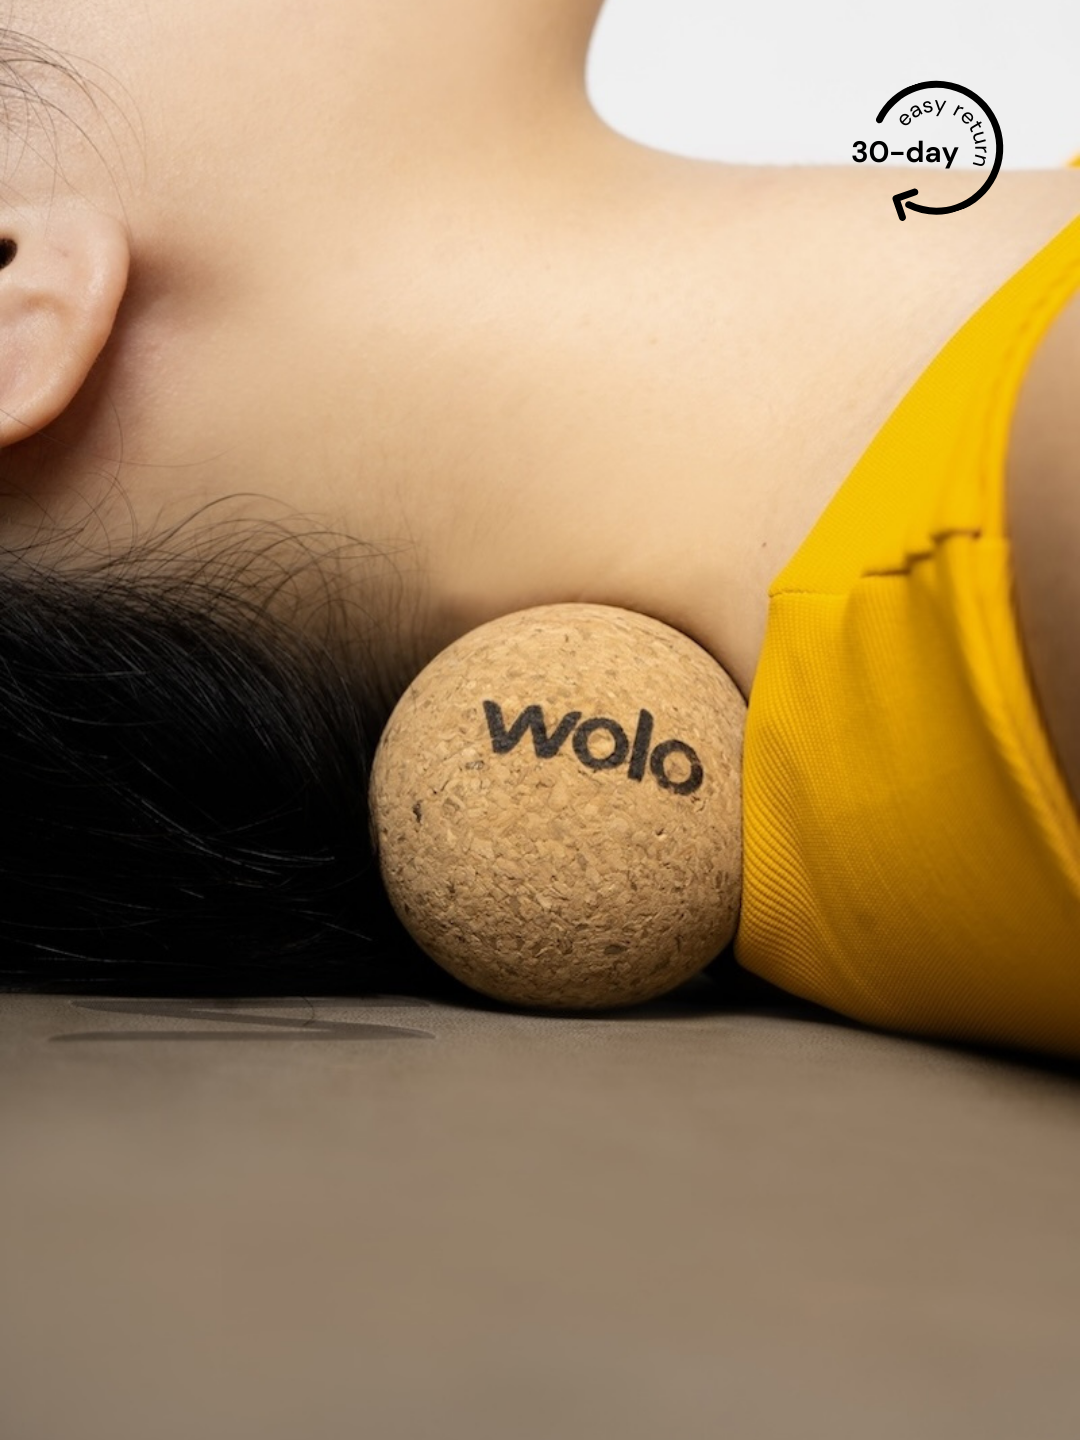 Release neck tension using a cork massage ball